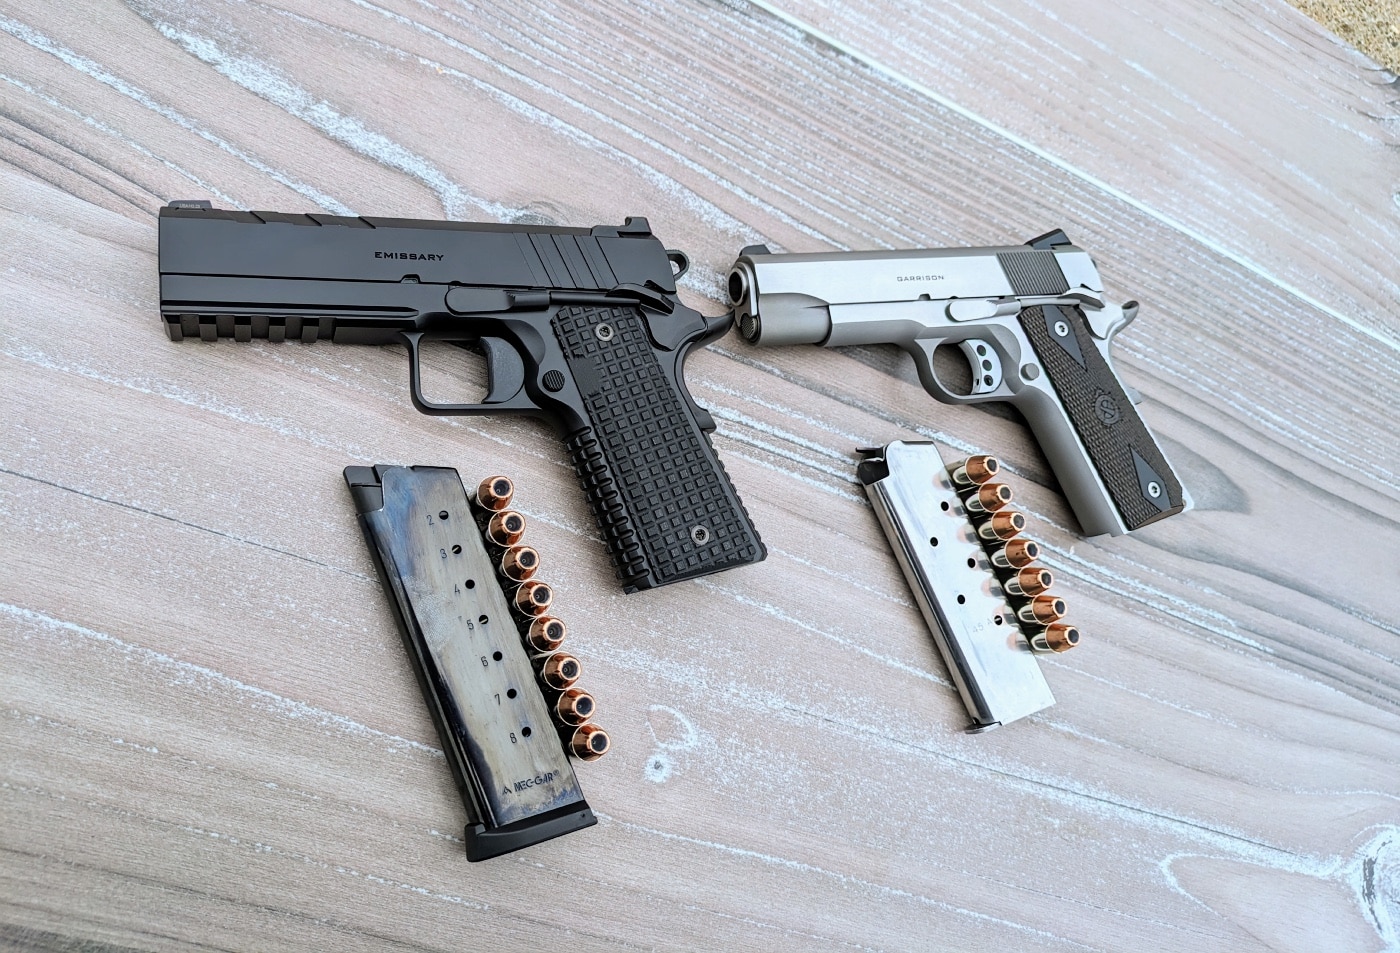 Garrison vs Emissary comparison corrosion ergonomics physics weapon design firearm components